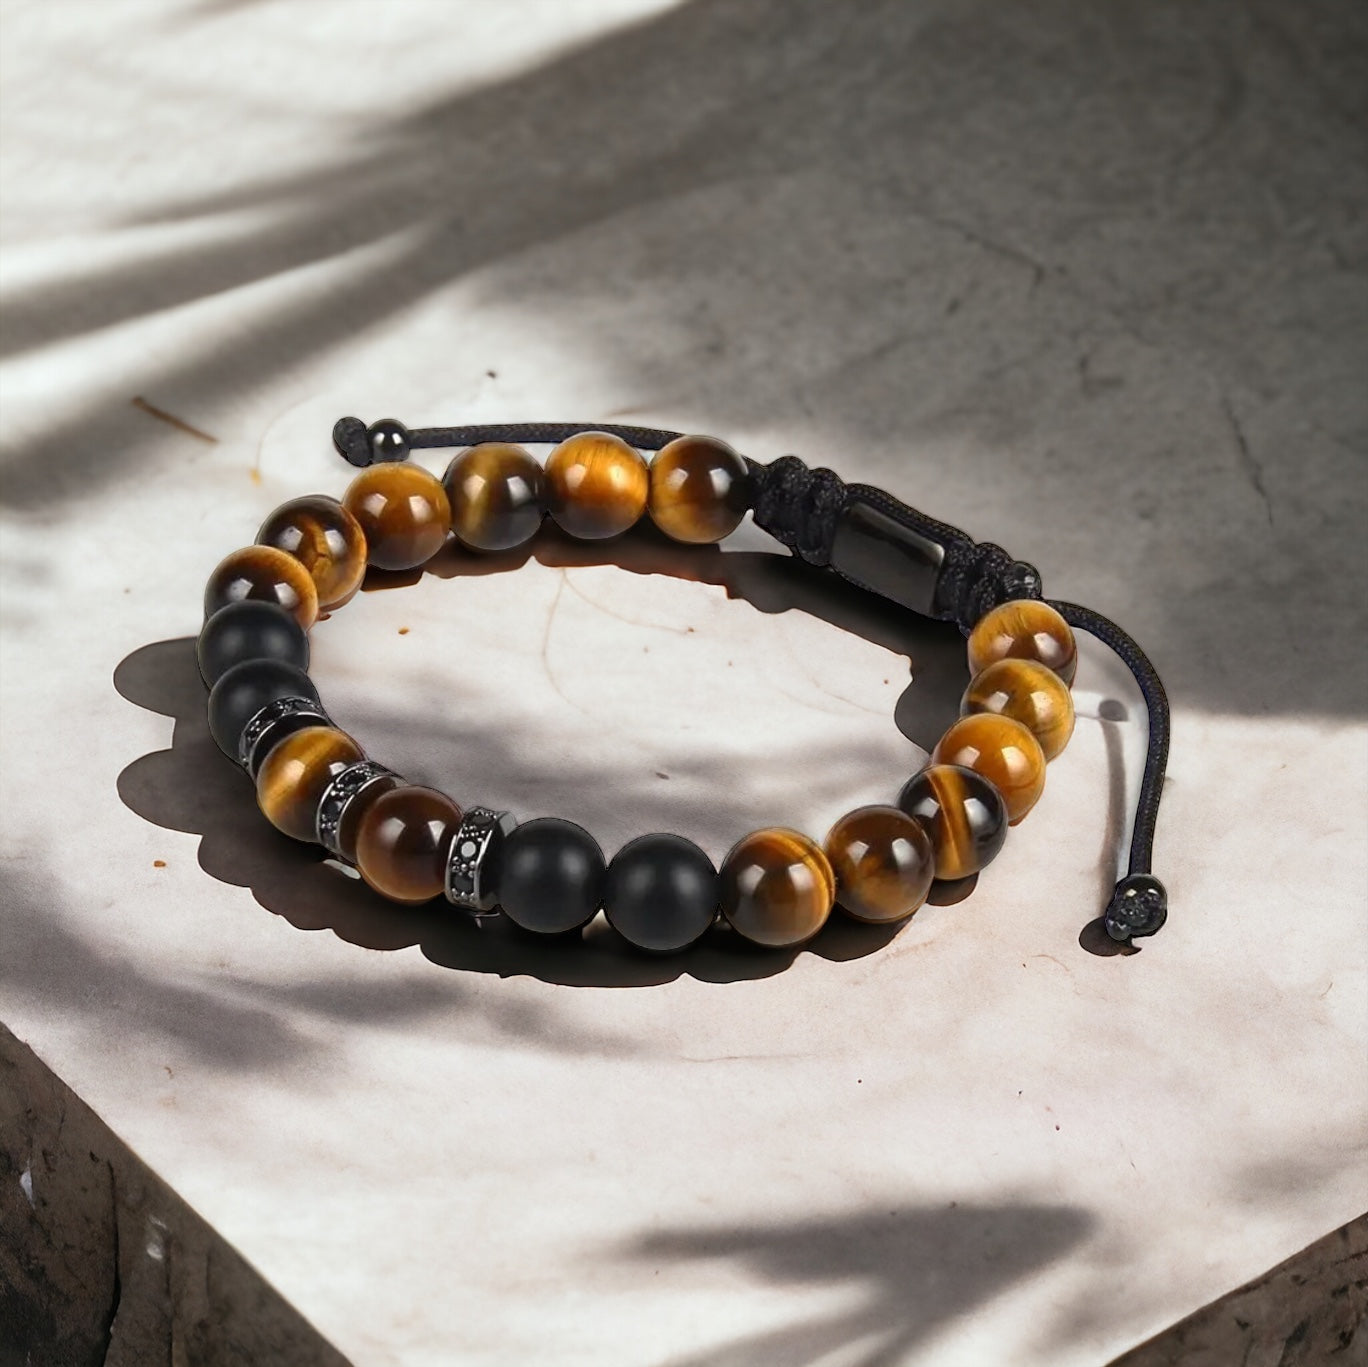 Tiger Eye & Black Onyx Beads Bracelet - My Harmony Tree